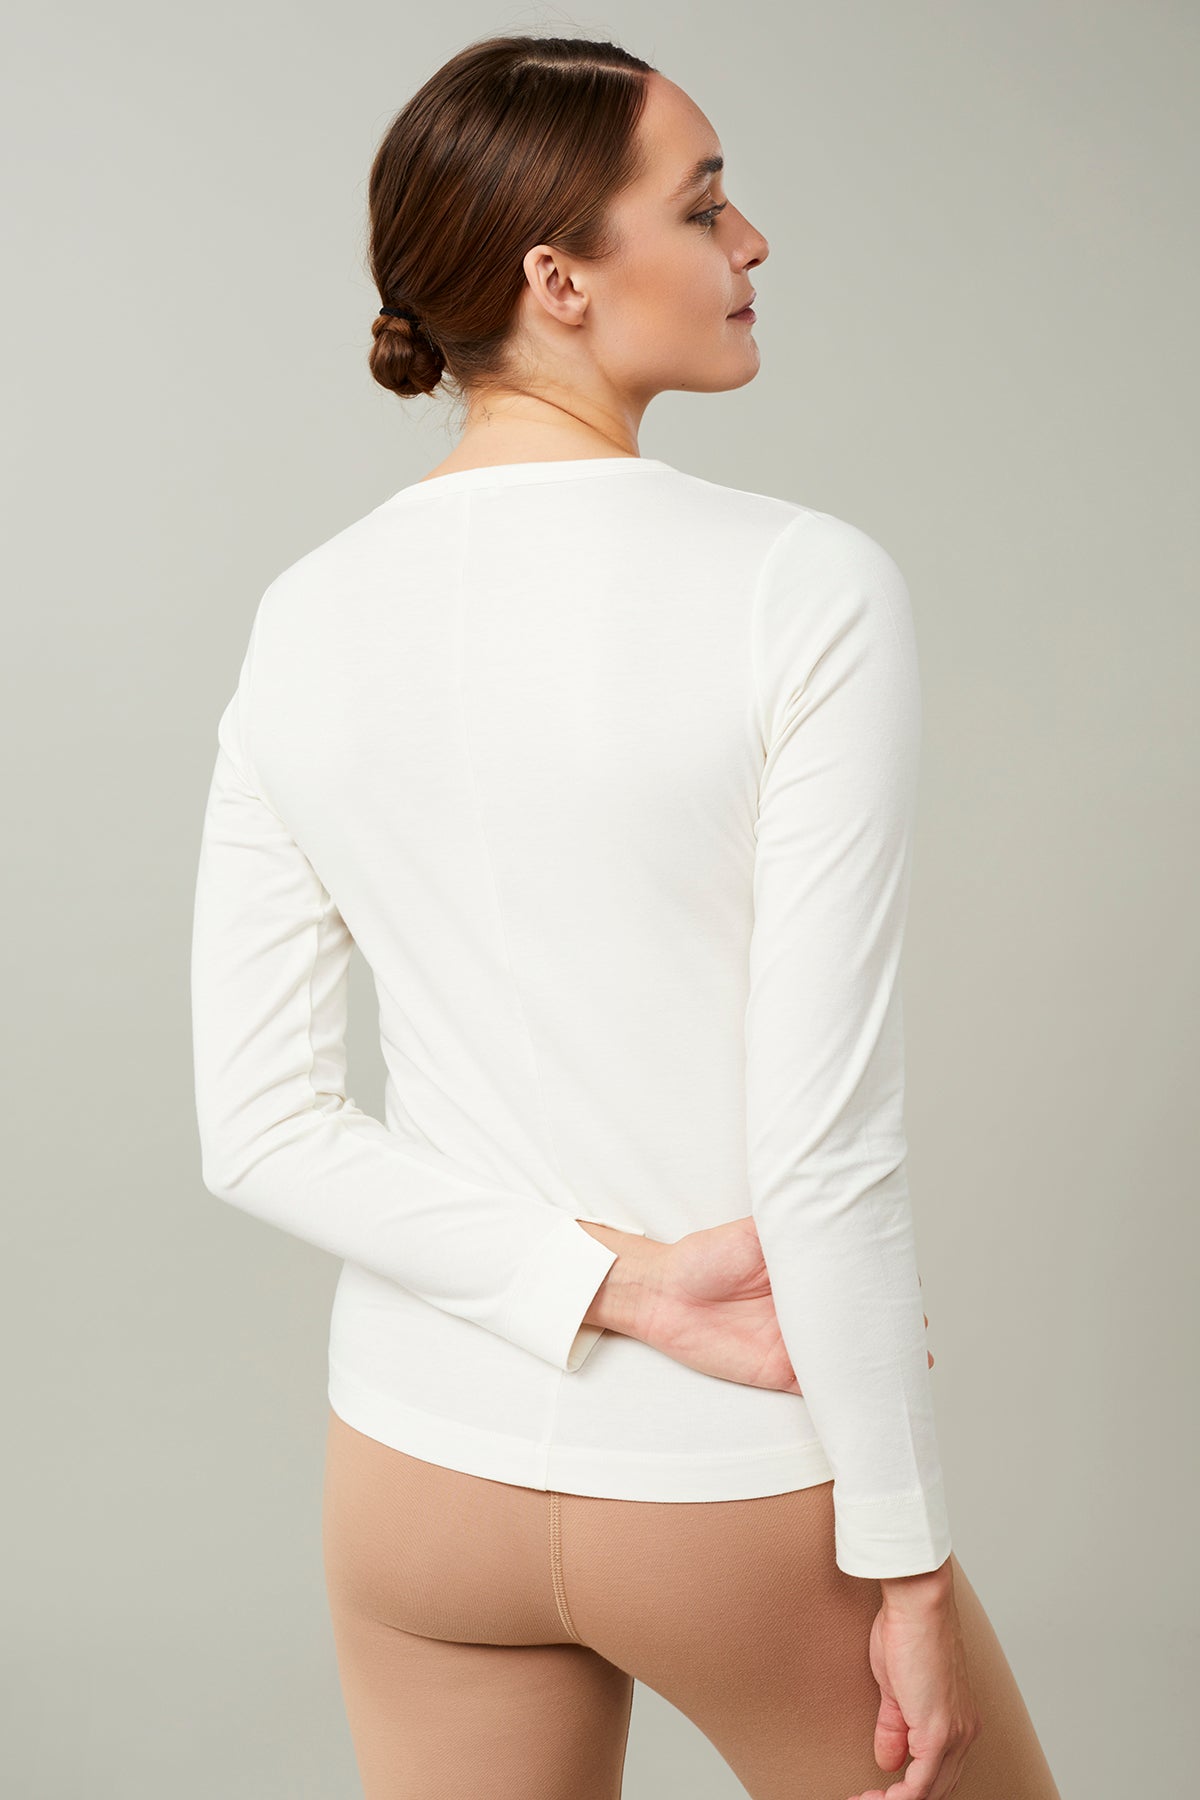 Mandala Yoga Shirt Weiß Rückseite - French Shirt